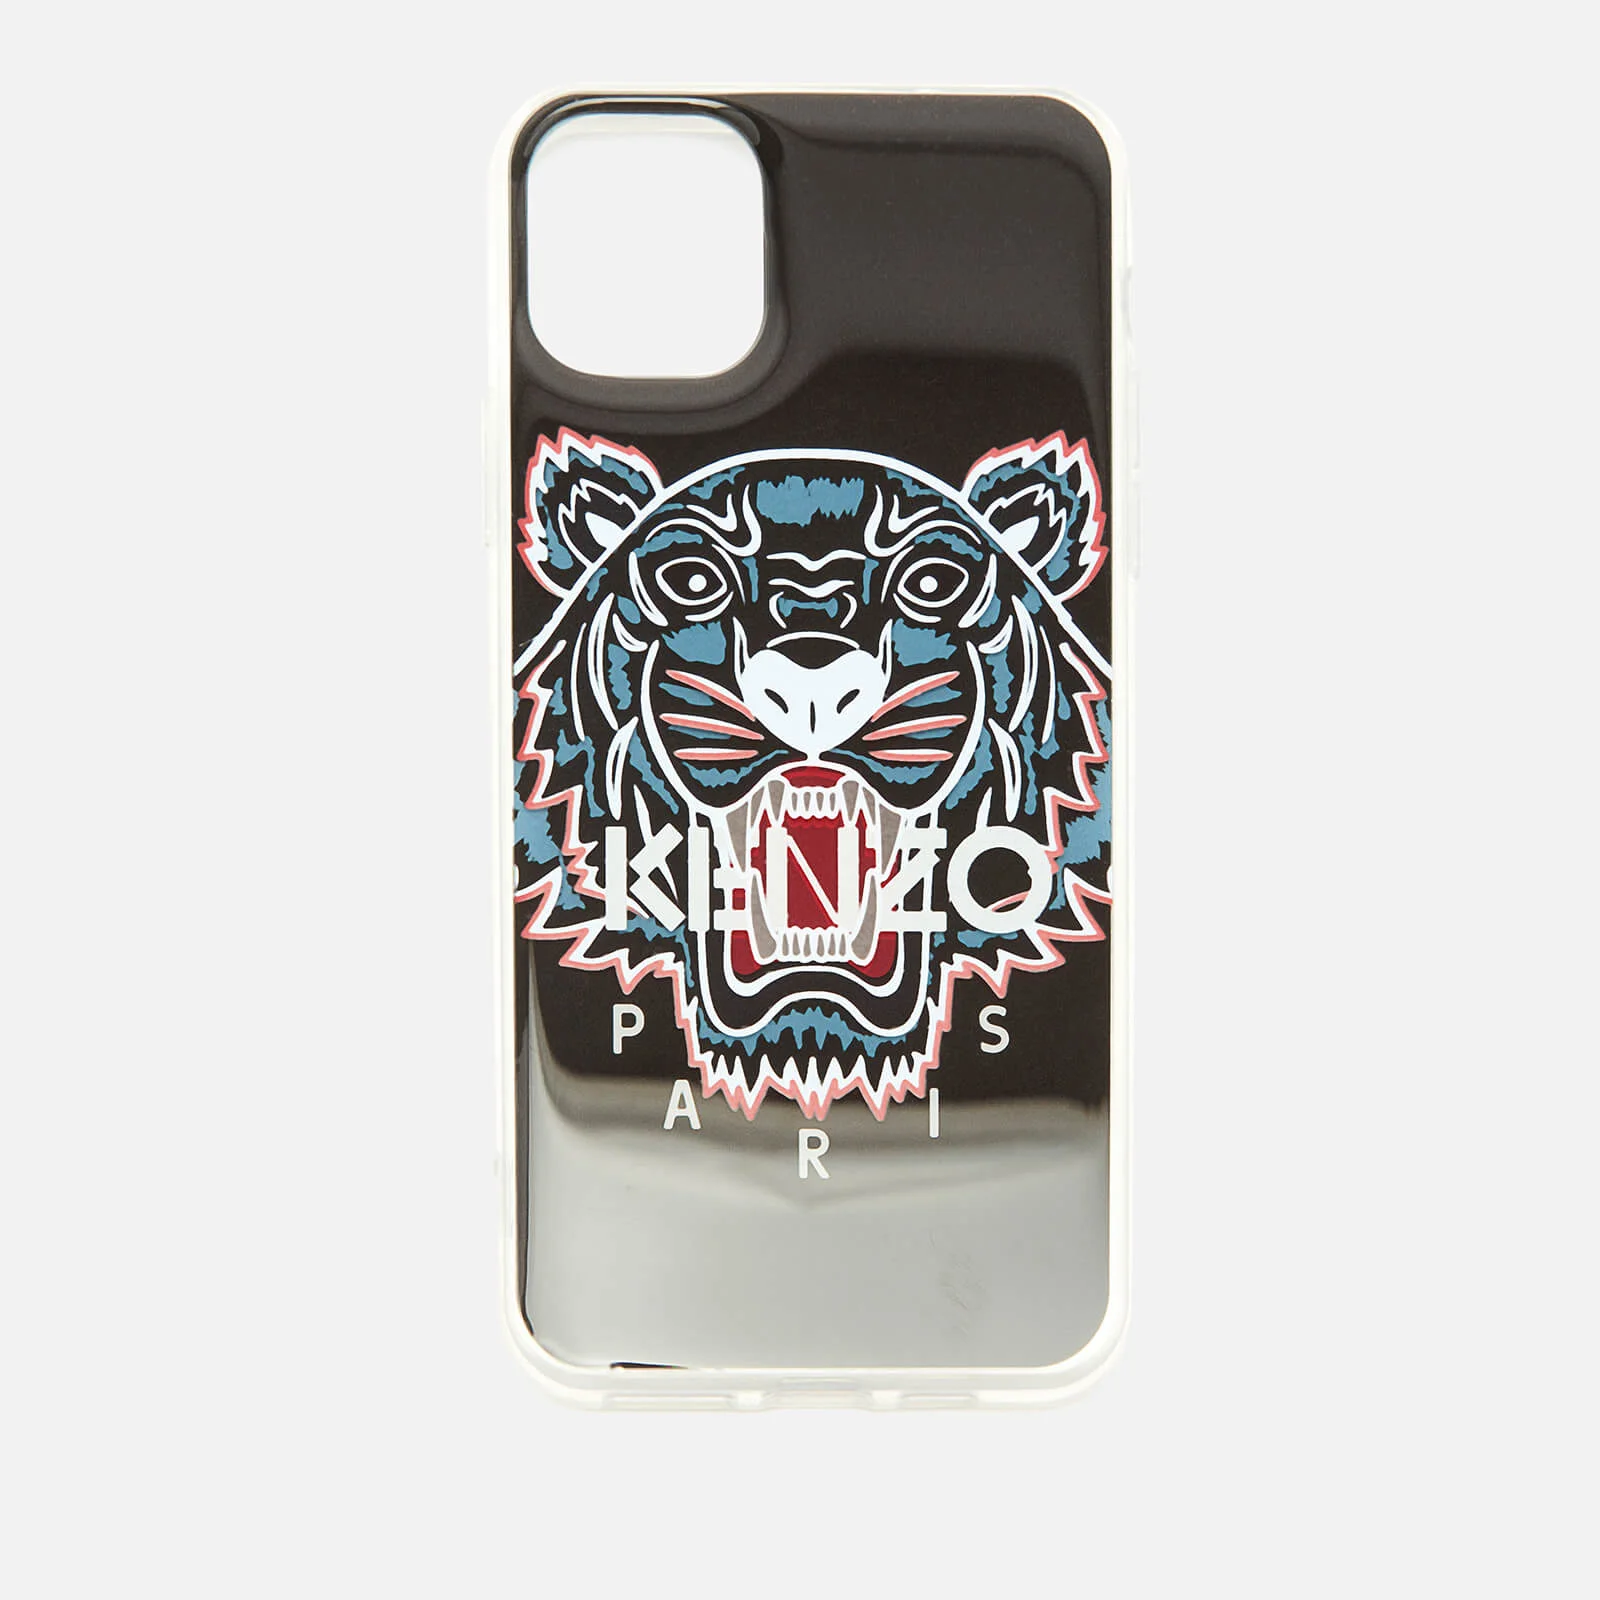 KENZO Men's Tiger iPhone 11 Pro Max Case - Black Image 1